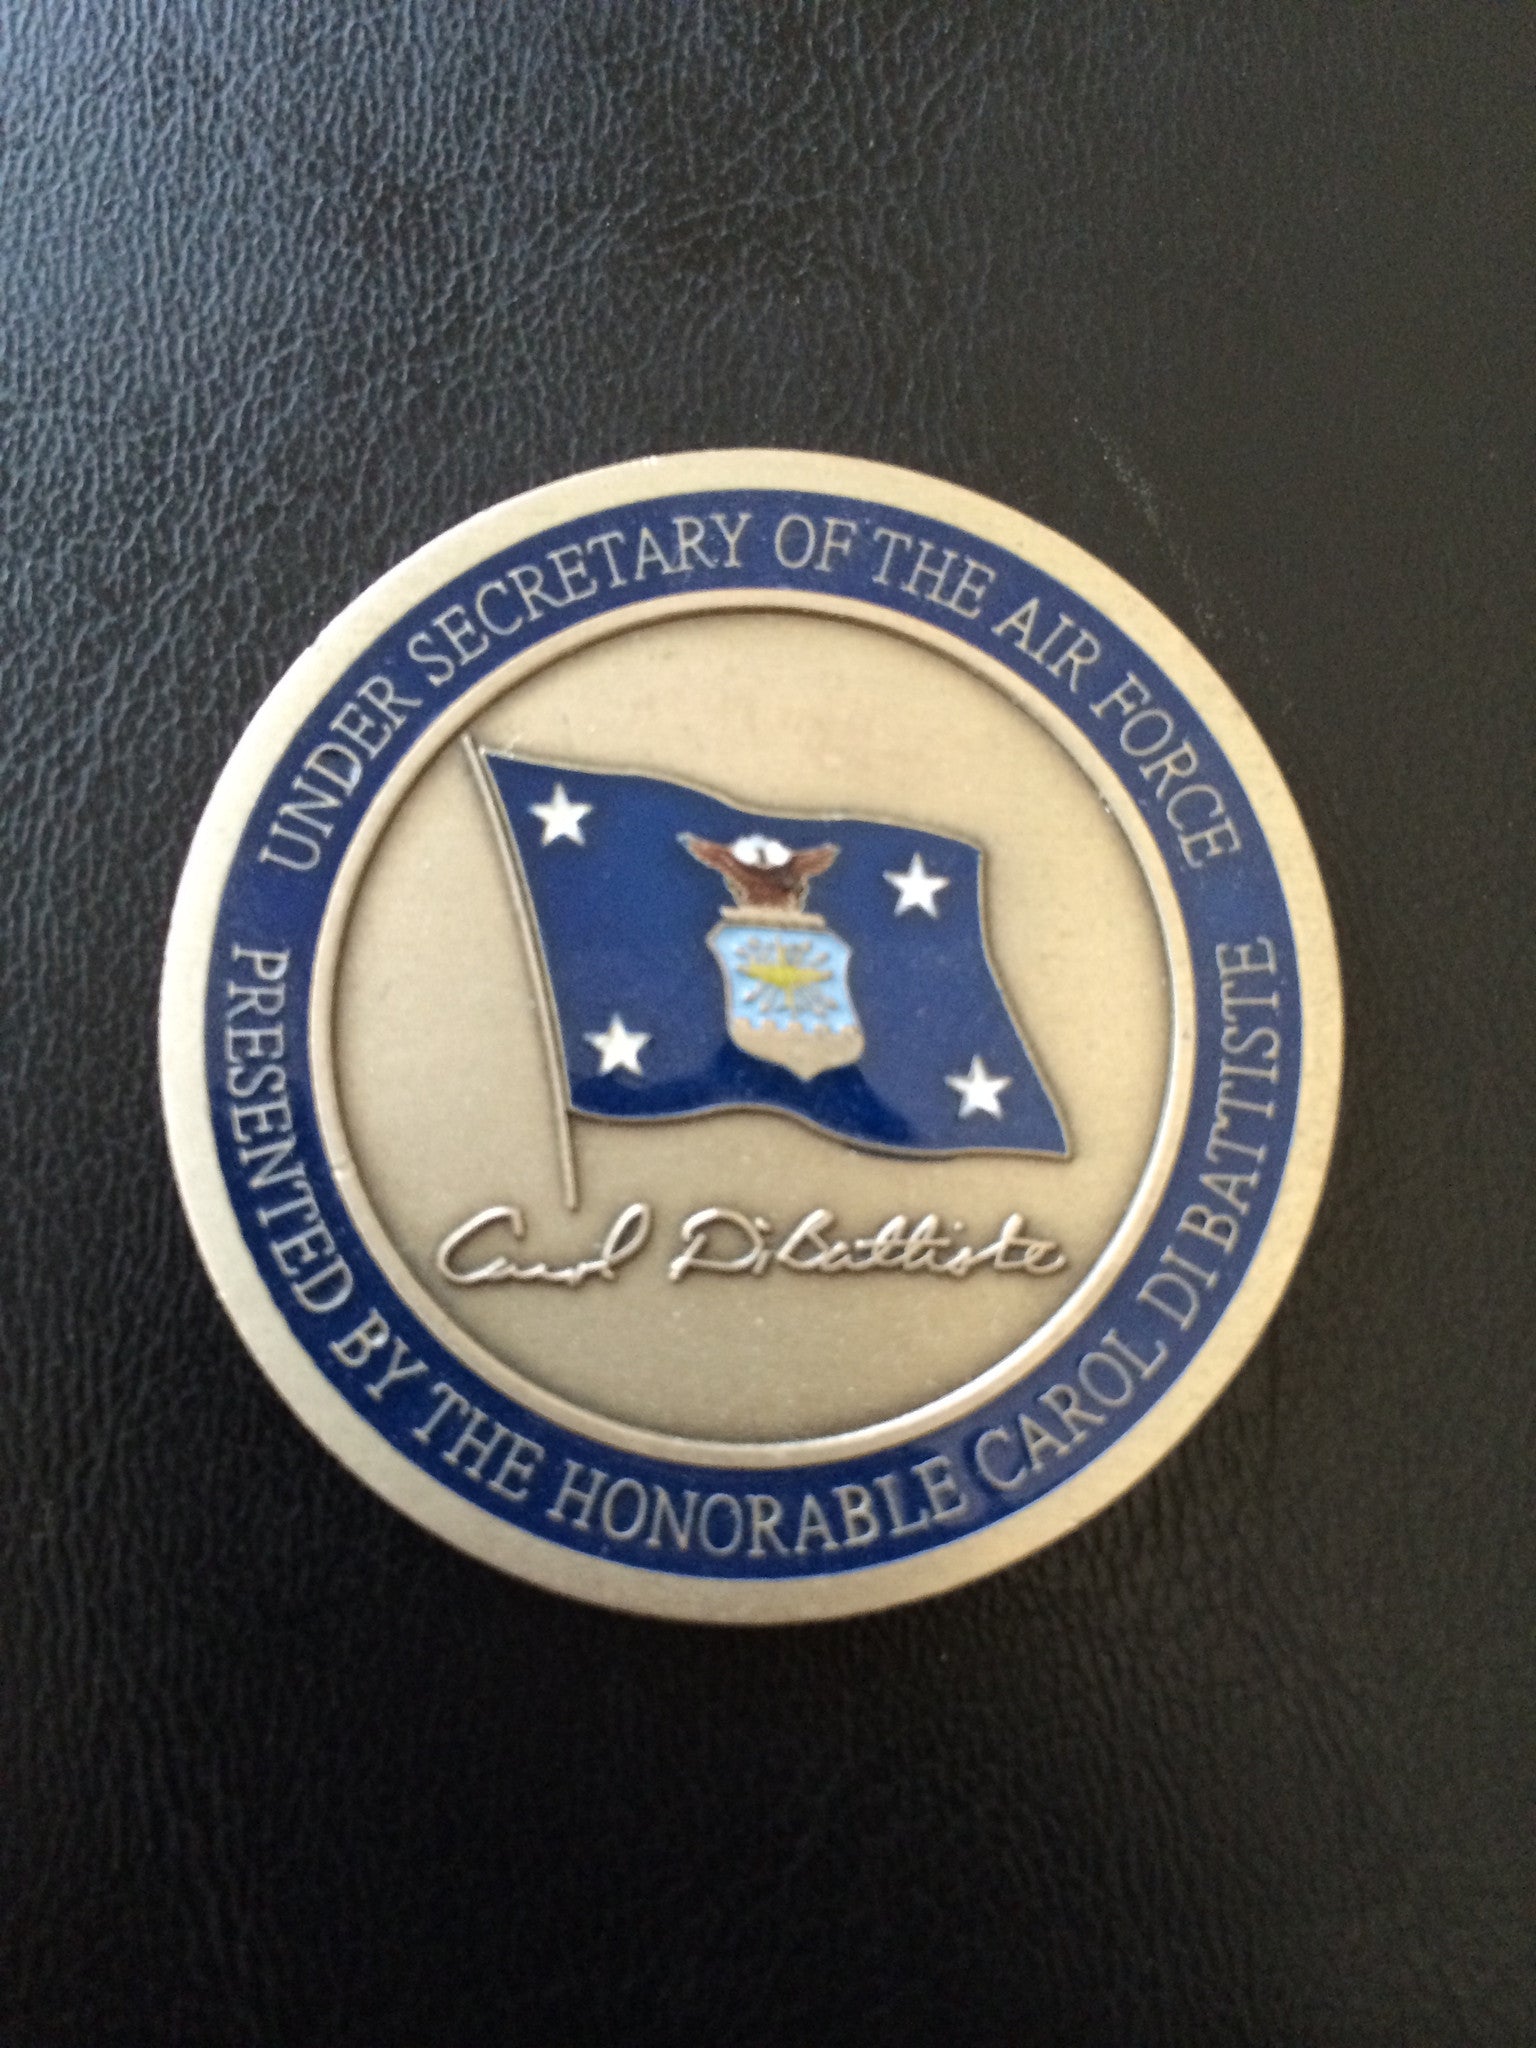 Under Secretary of the Air Force (20th) Carol A. DiBattiste (Blue Flag)